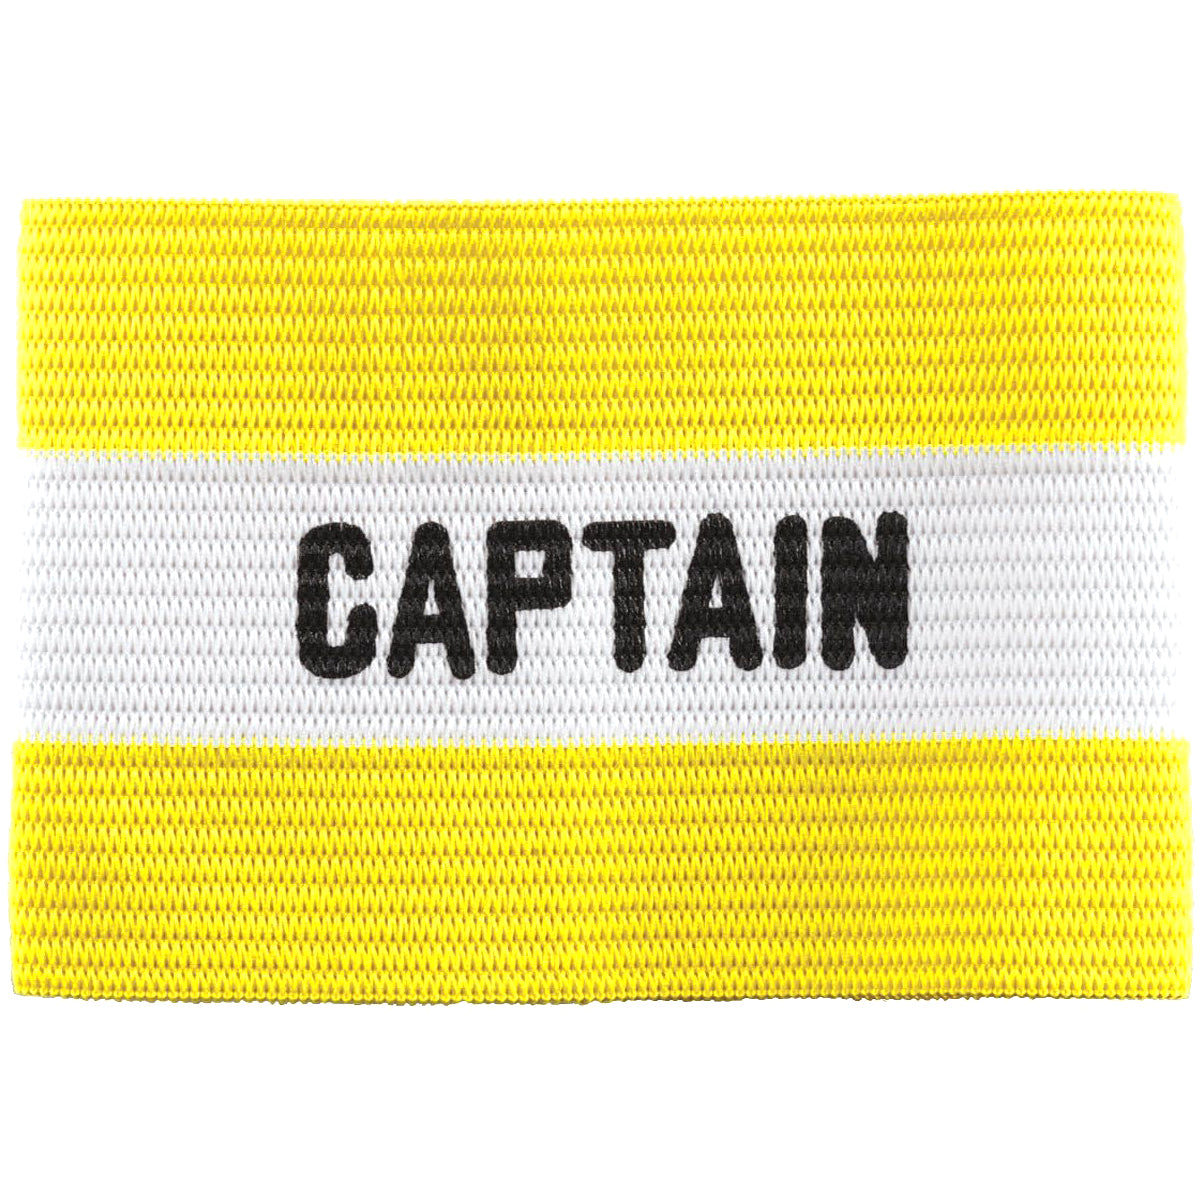 Kwikgoal Captain Arm Band | 19B4 Training equipment Kwikgoal Adult Yellow 